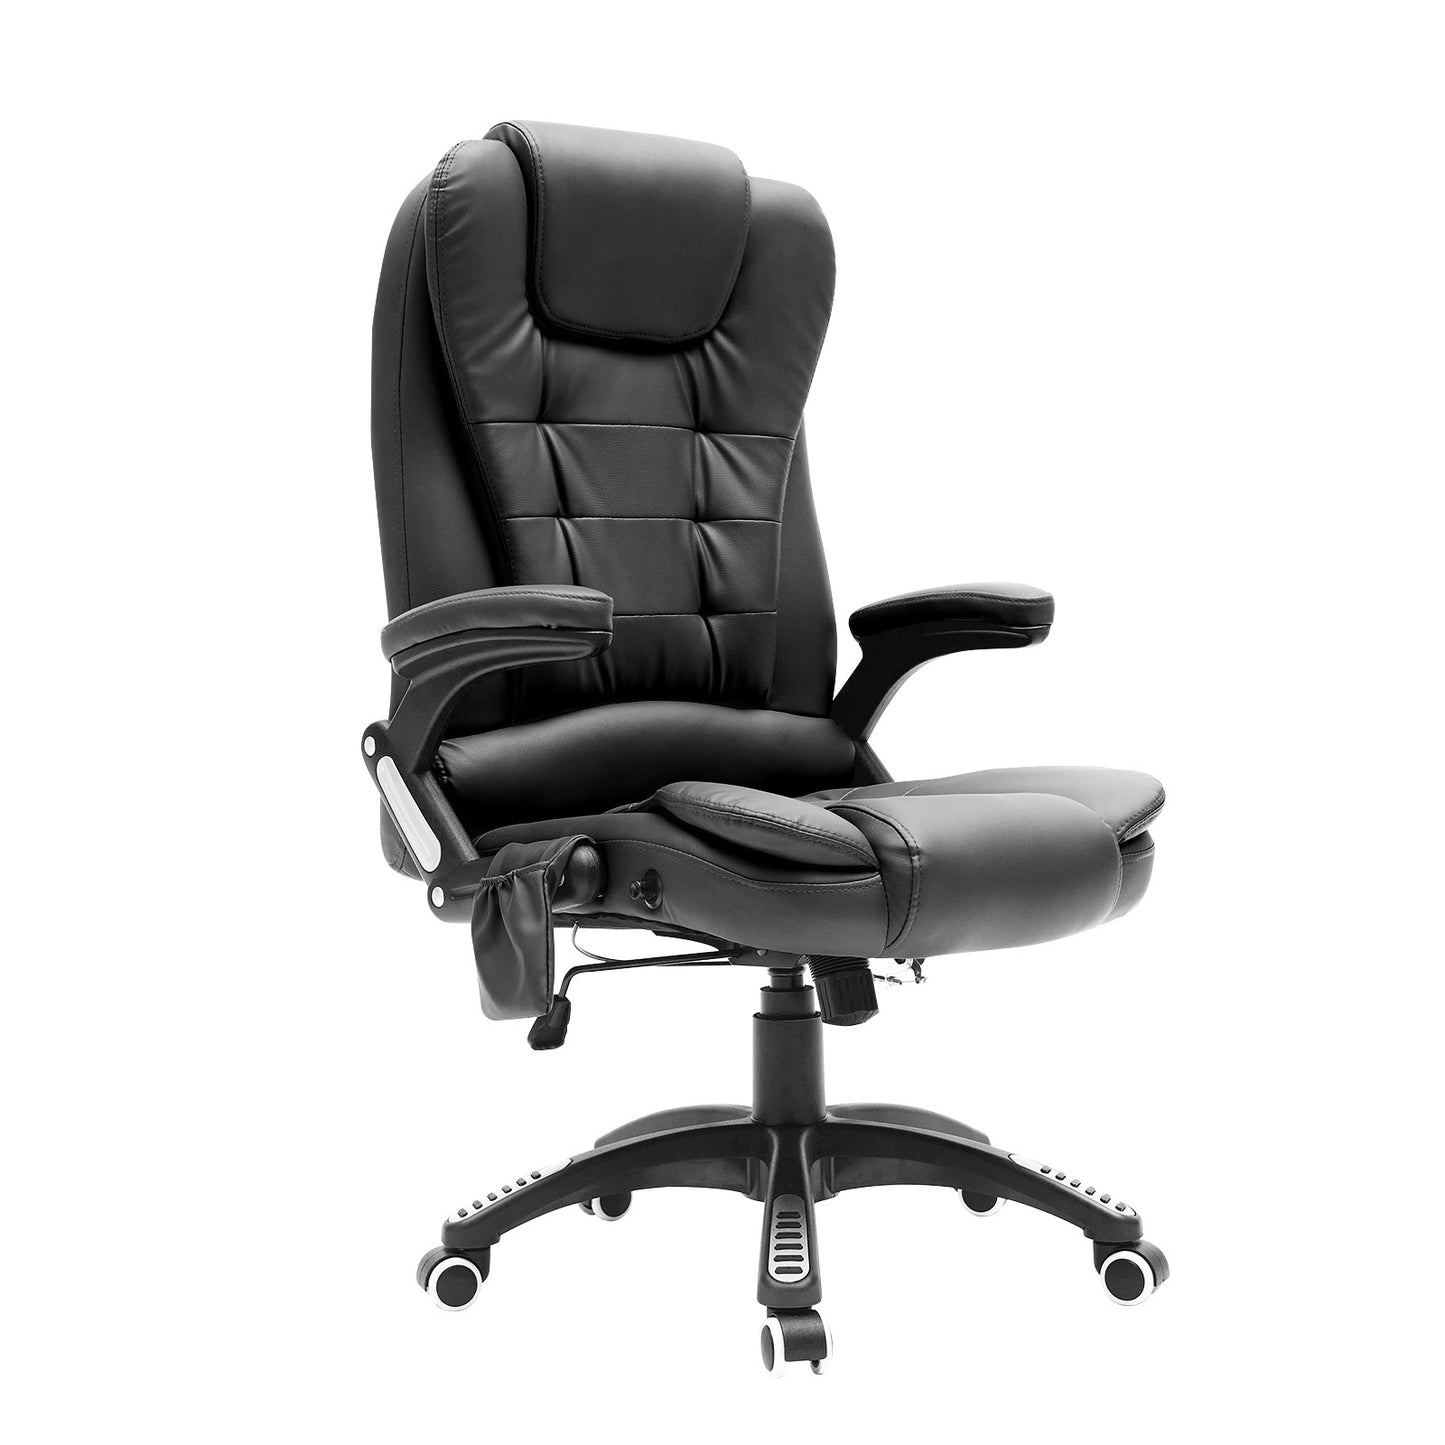 8 Point Vibration, Massage, Heated, Ergonomic Office Chair - Black